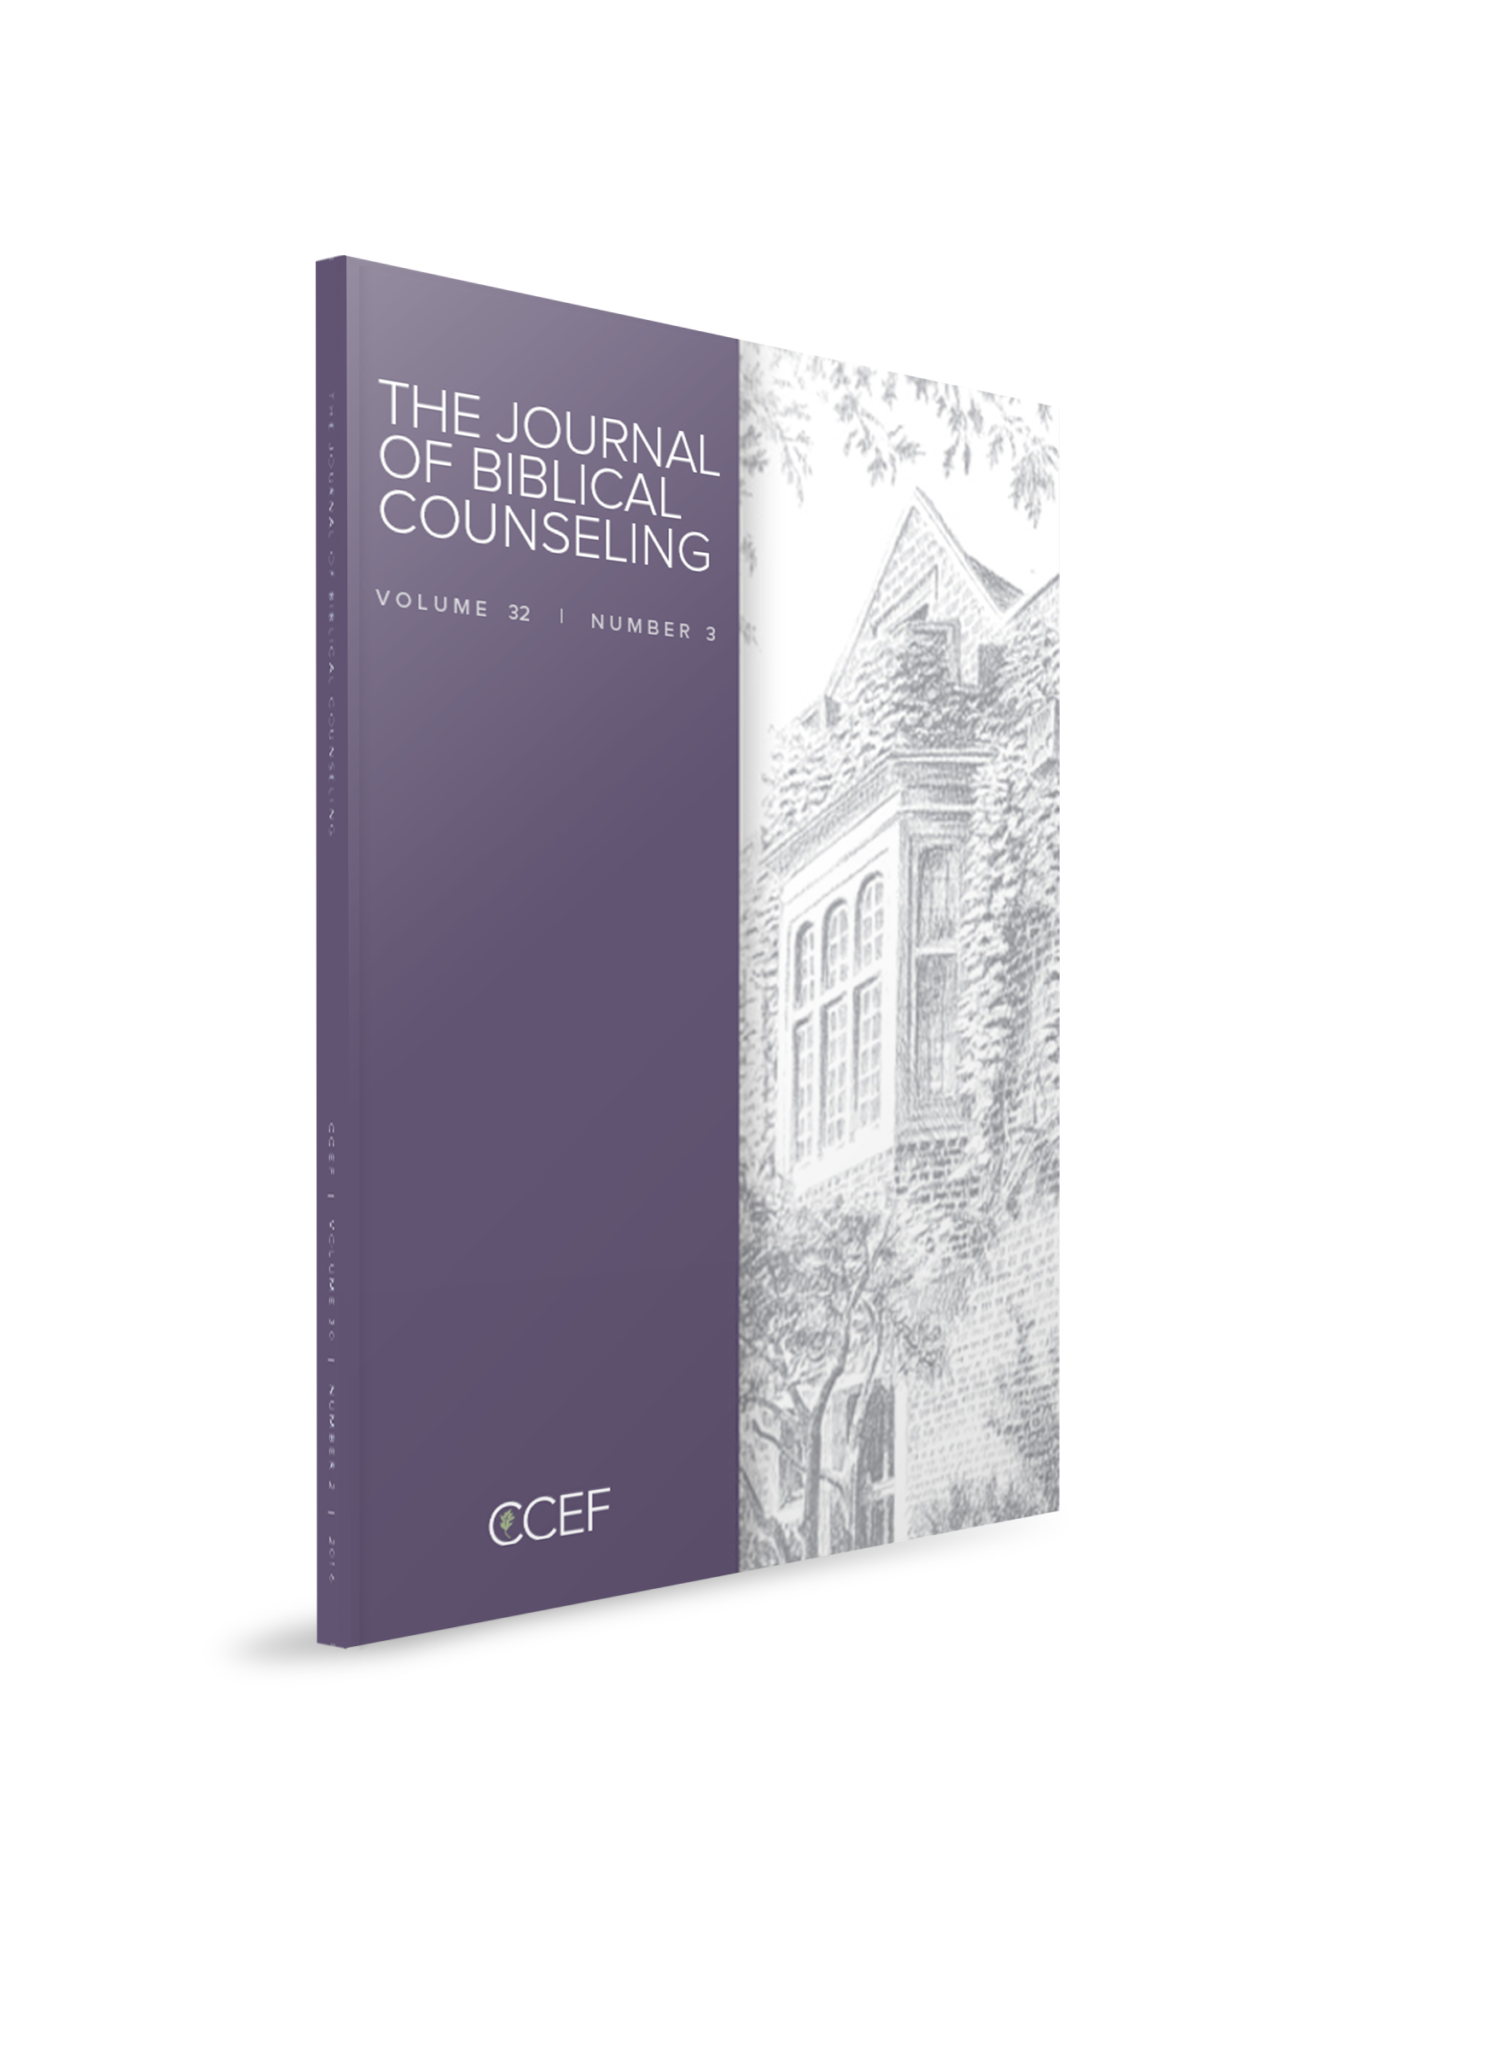 Journal of biblical counseling pdf format